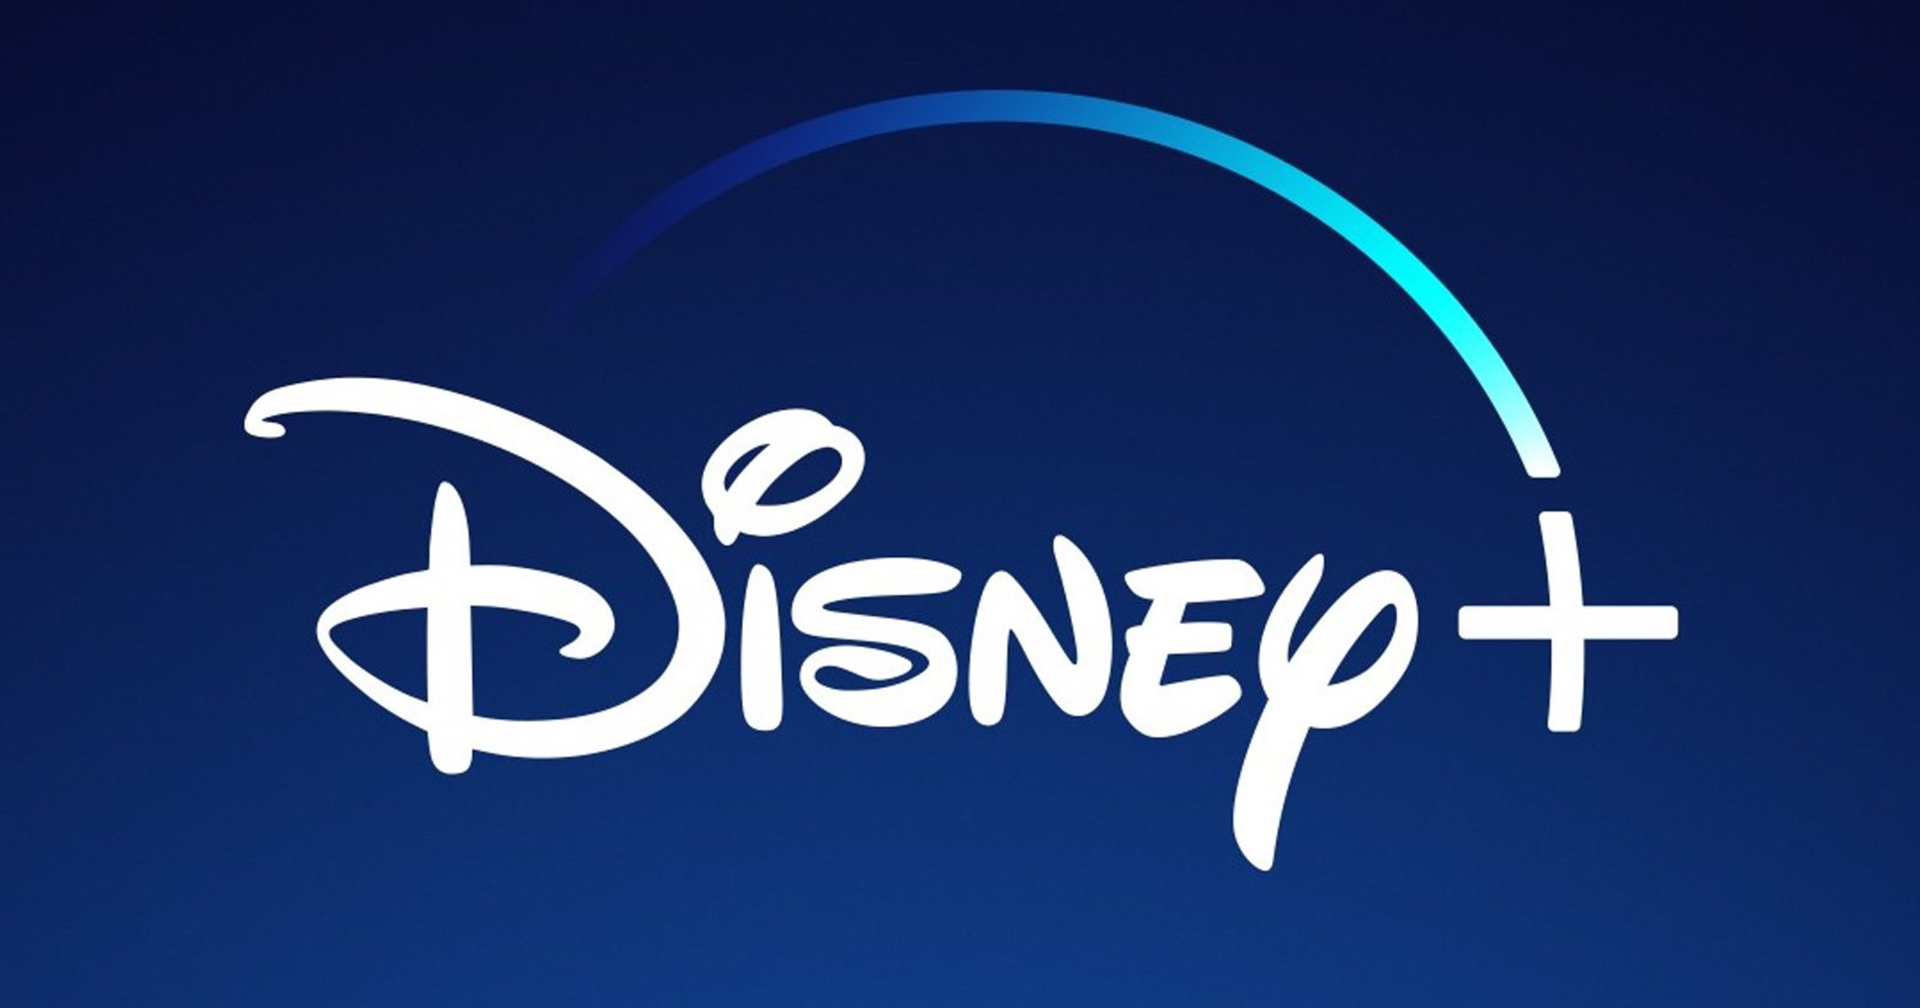 Disney ยืนยัน ปรับเพิ่มค่าบริการ Disney+ และเริ่มให้บริการแบบมีโฆษณาในเดือนธันวาคมนี้